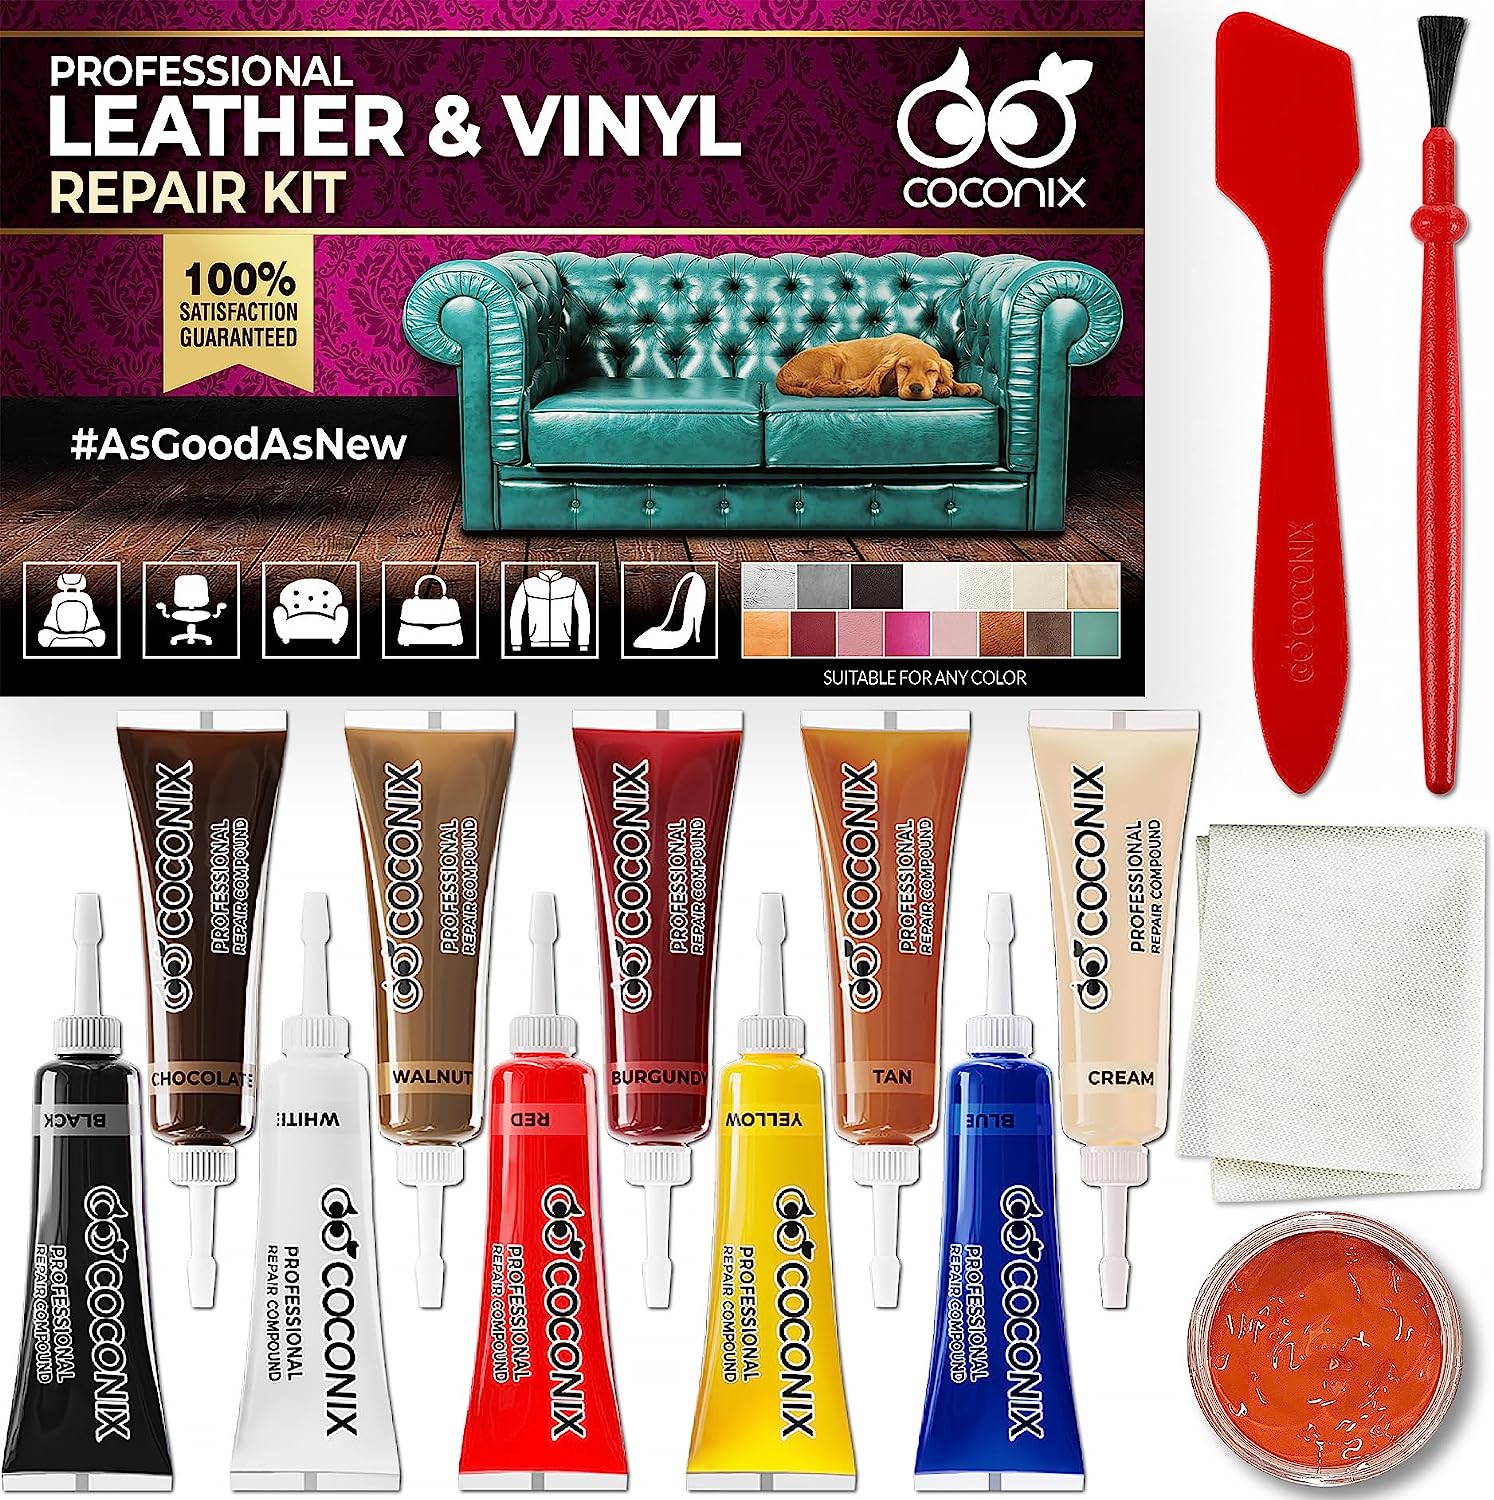 Coconix Vinyl and Leather Repair Kit - Restorer of [...]